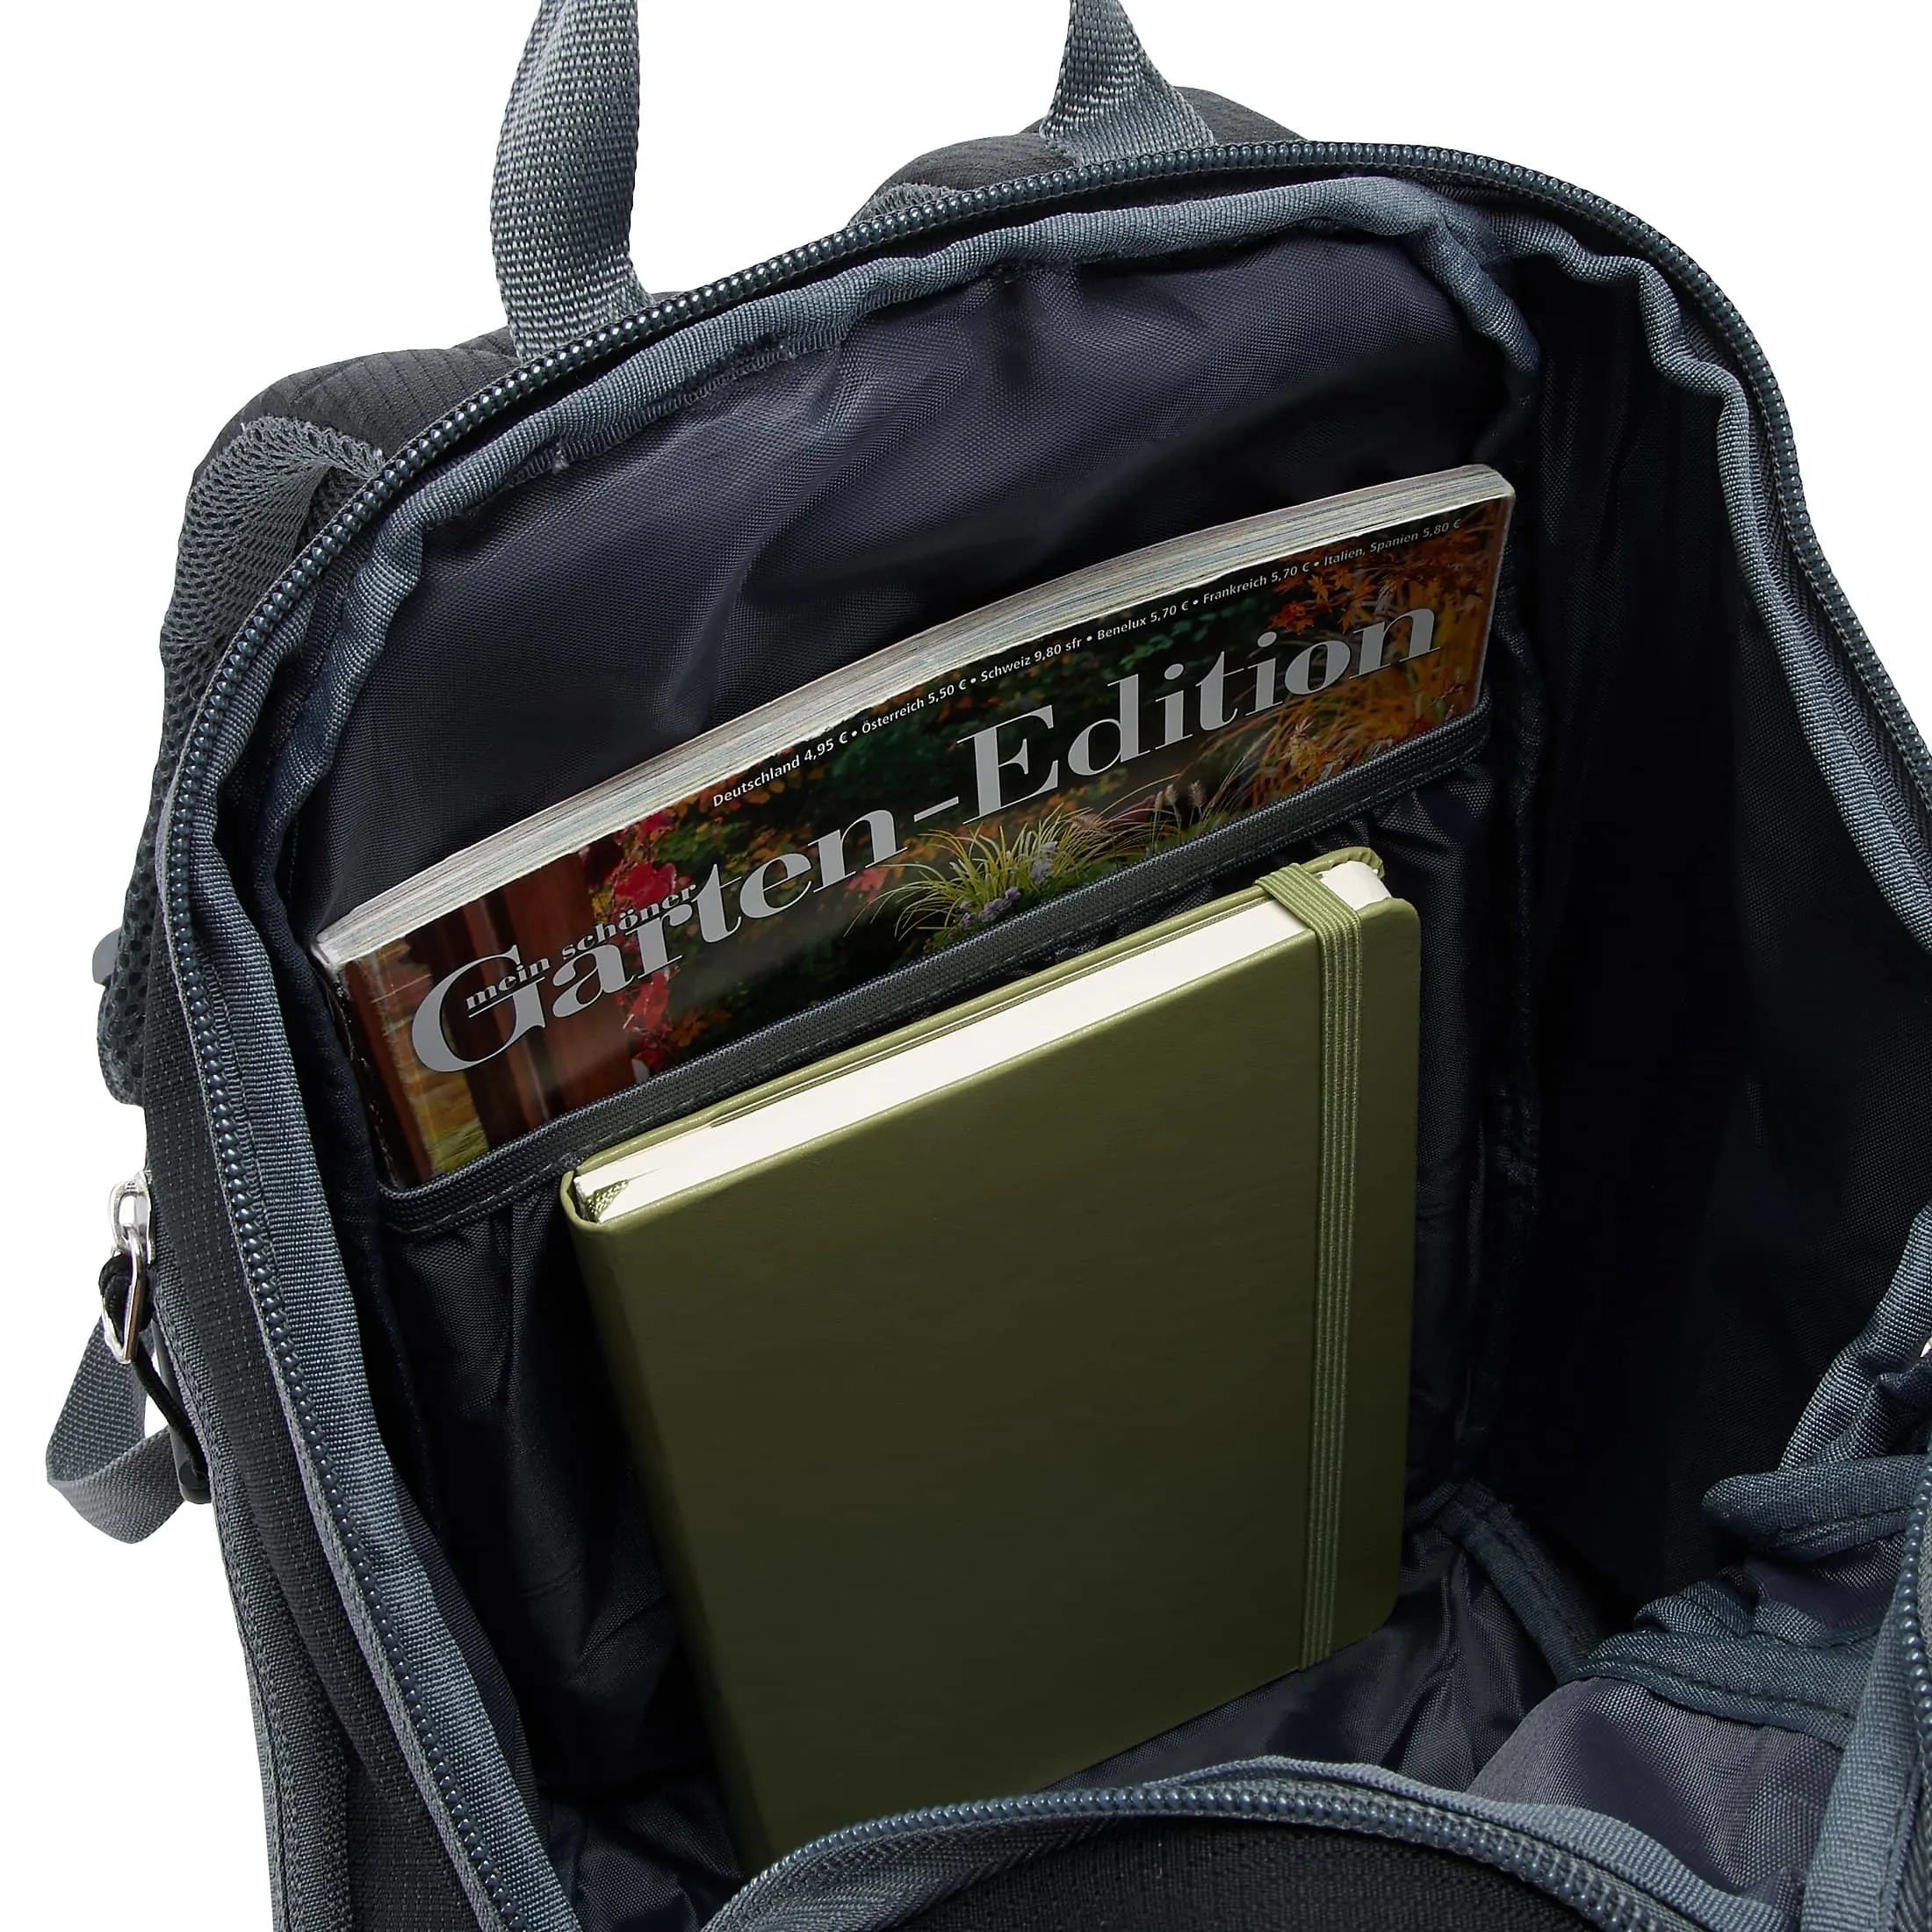 Travelite Basics sac à dos 35 cm - rouge-gris